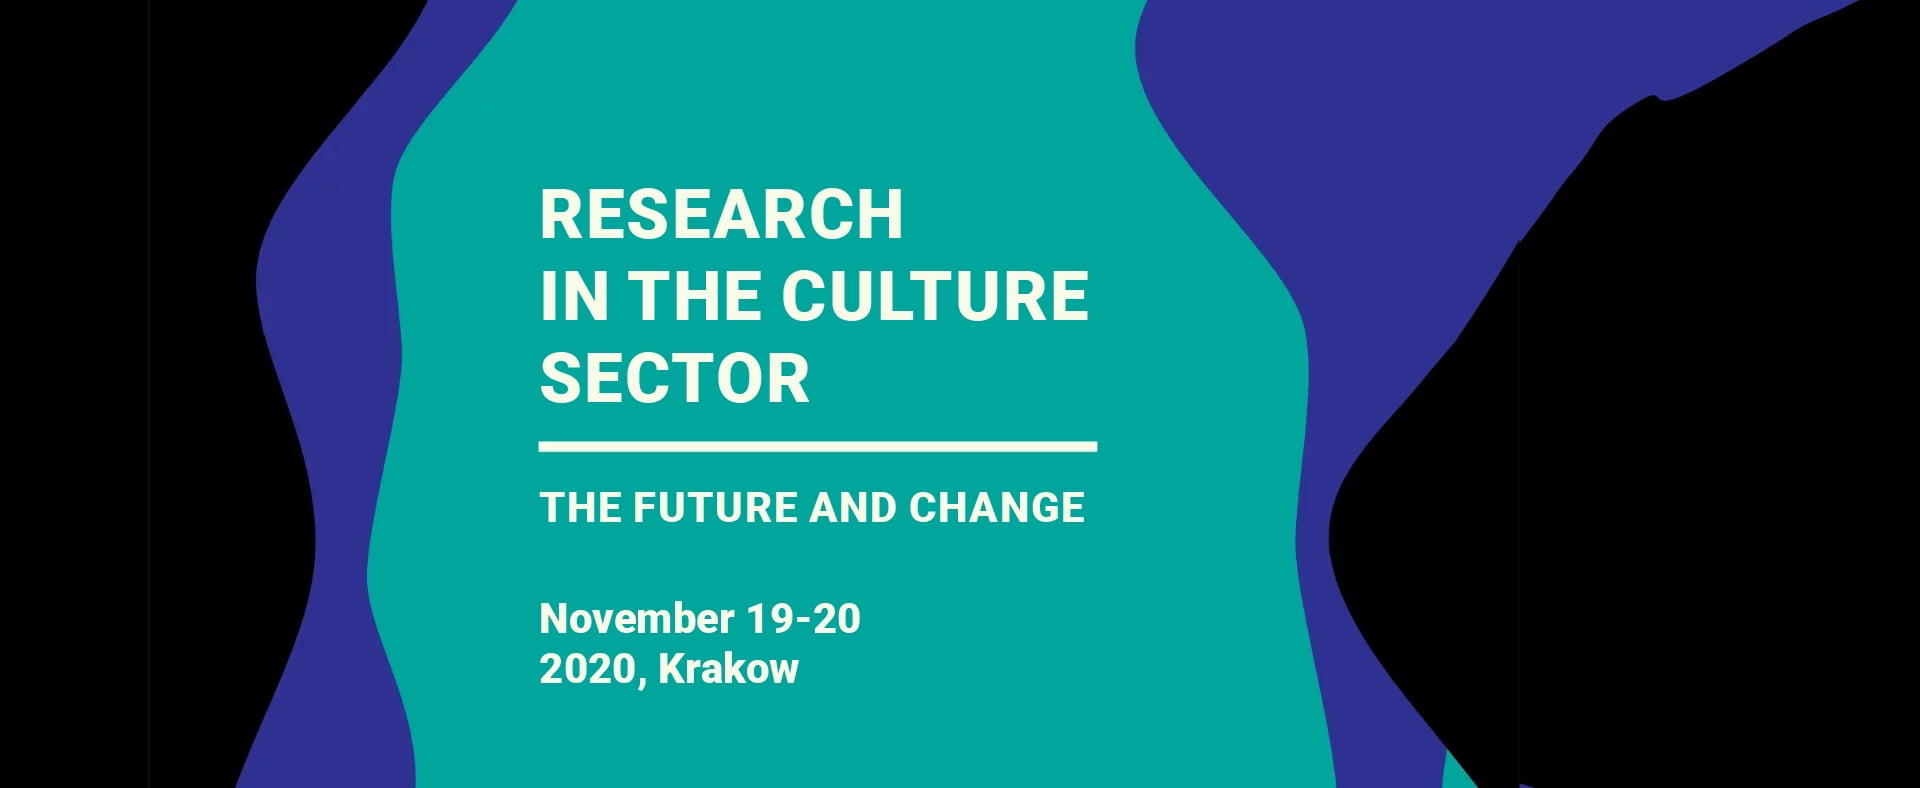 Research in culture sector